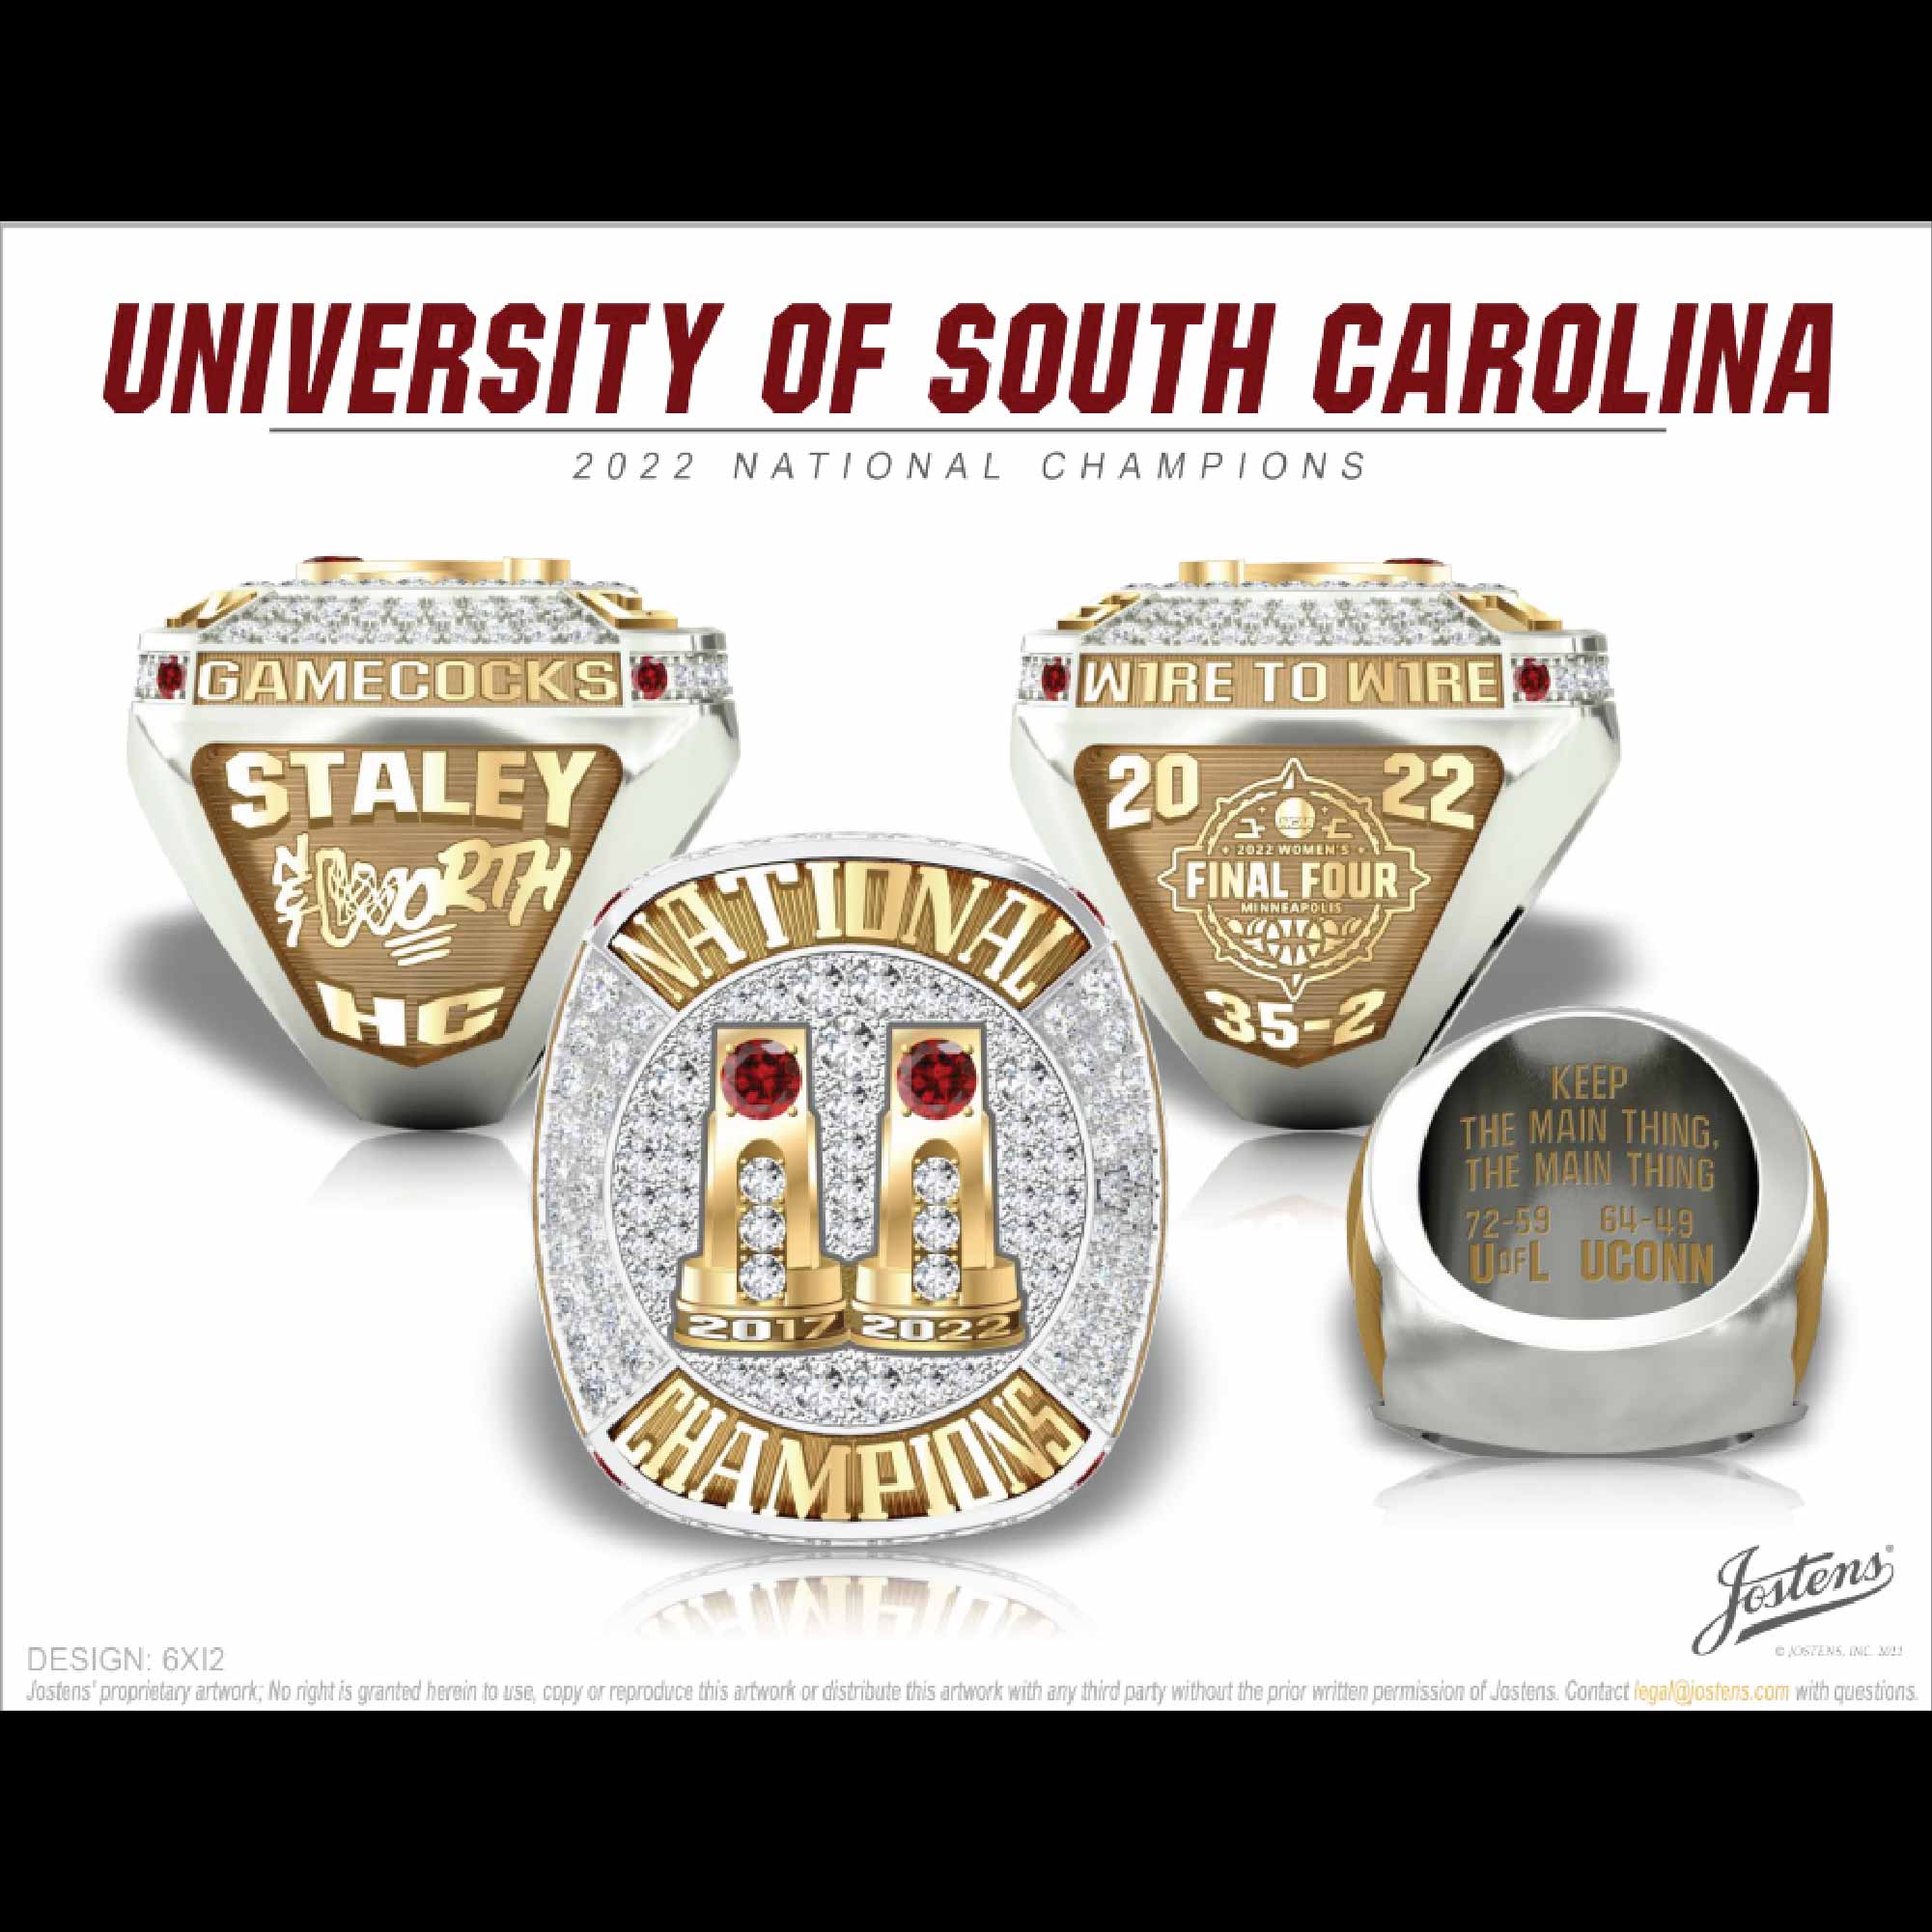 University of South Carolina Women's Basketball 2022 National Championship Ring